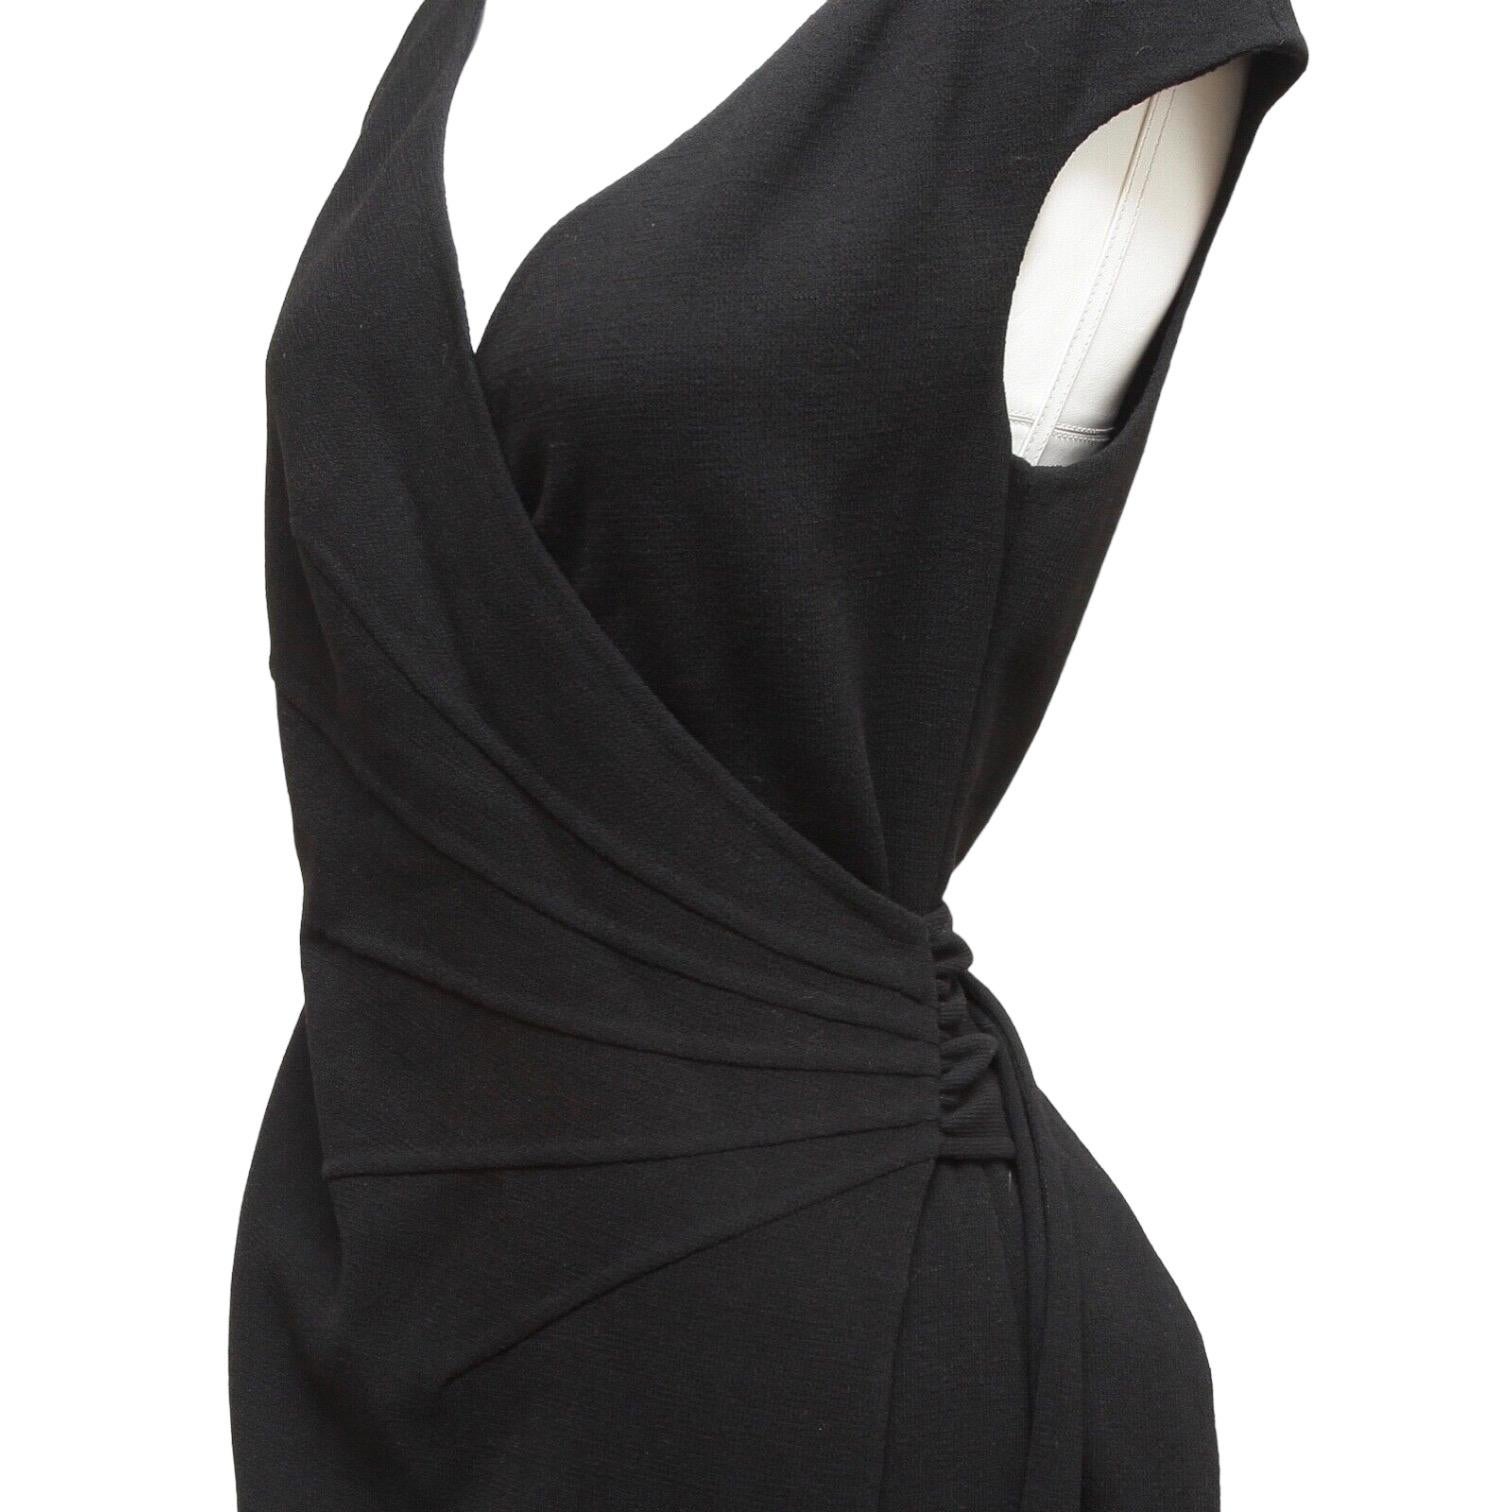 Women's OSCAR DE LA RENTA Dress Black Sleeveless Wrap Knit Sz 8 NWT $2190